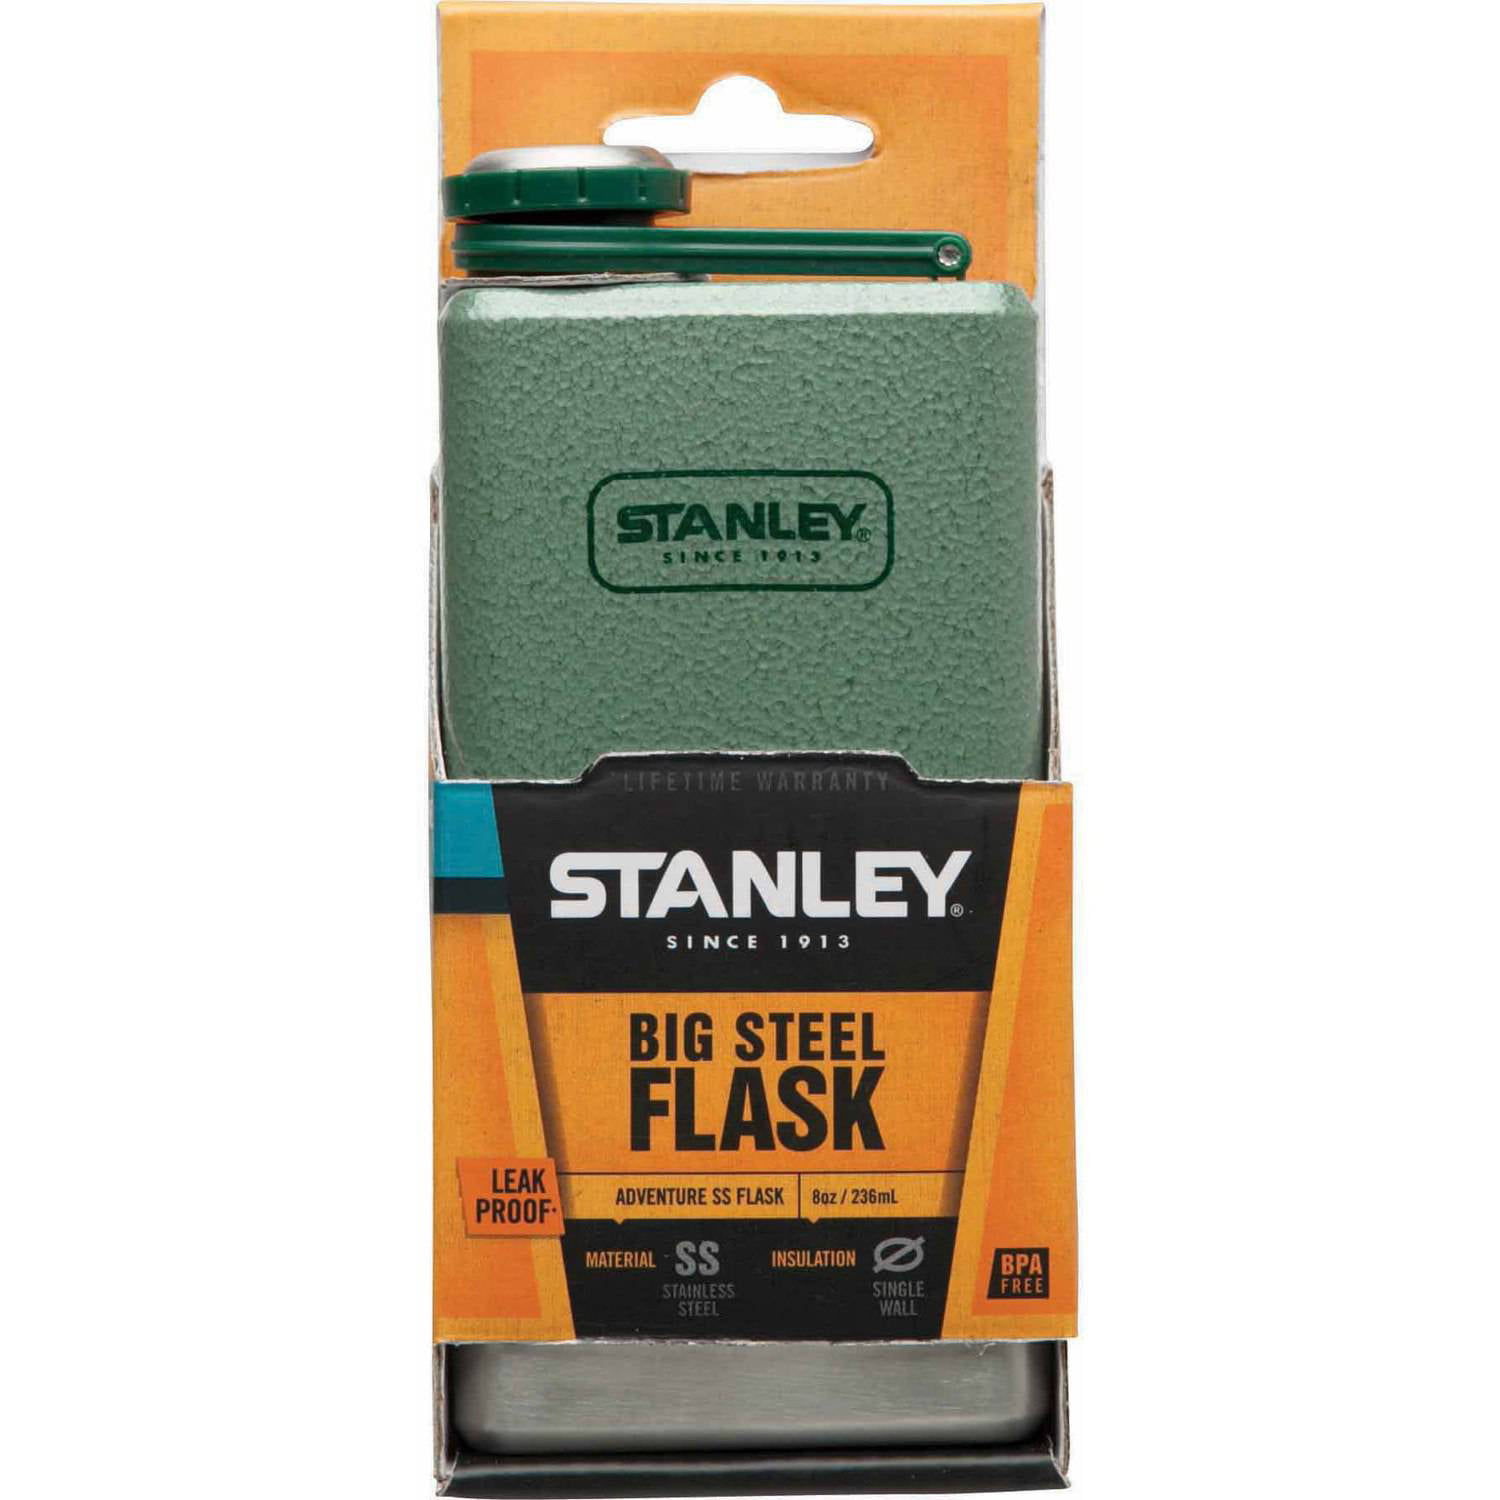 Stanley ADVENTURE STAINLESS STEEL FLASK 8 oz LEAK PROOF RUST-FREE Never  Lose Cap